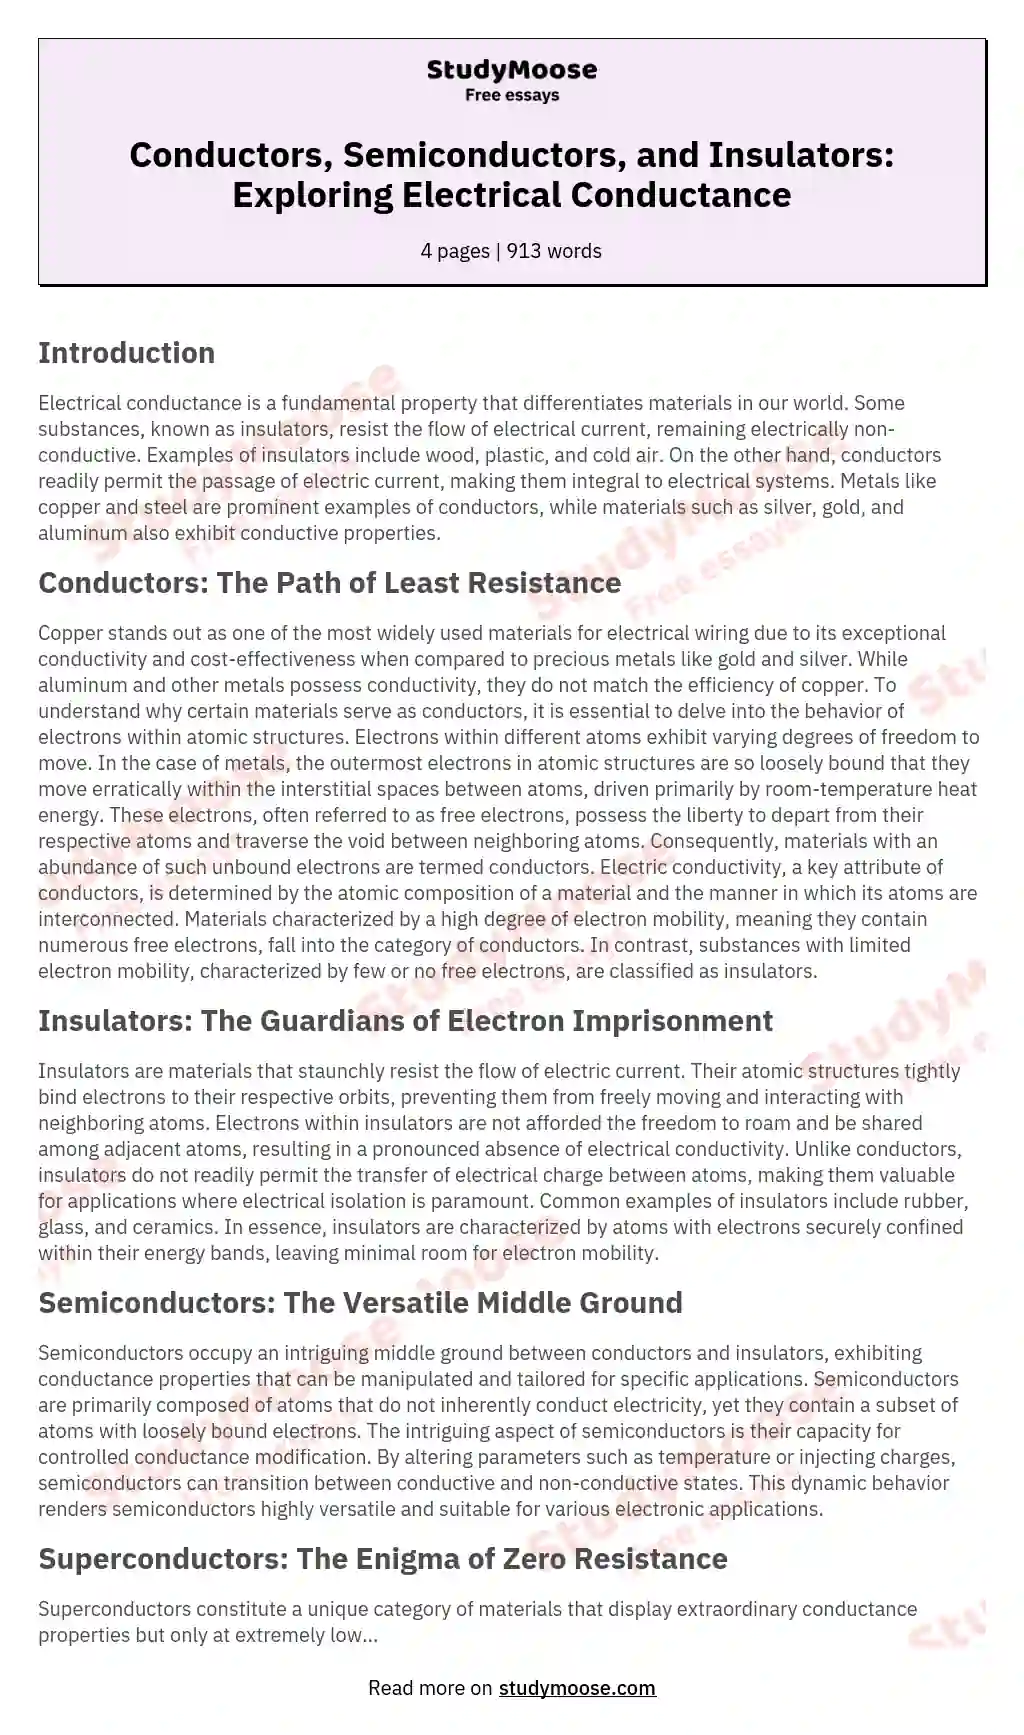 Conductors, Semiconductors, and Insulators: Exploring Electrical Conductance essay